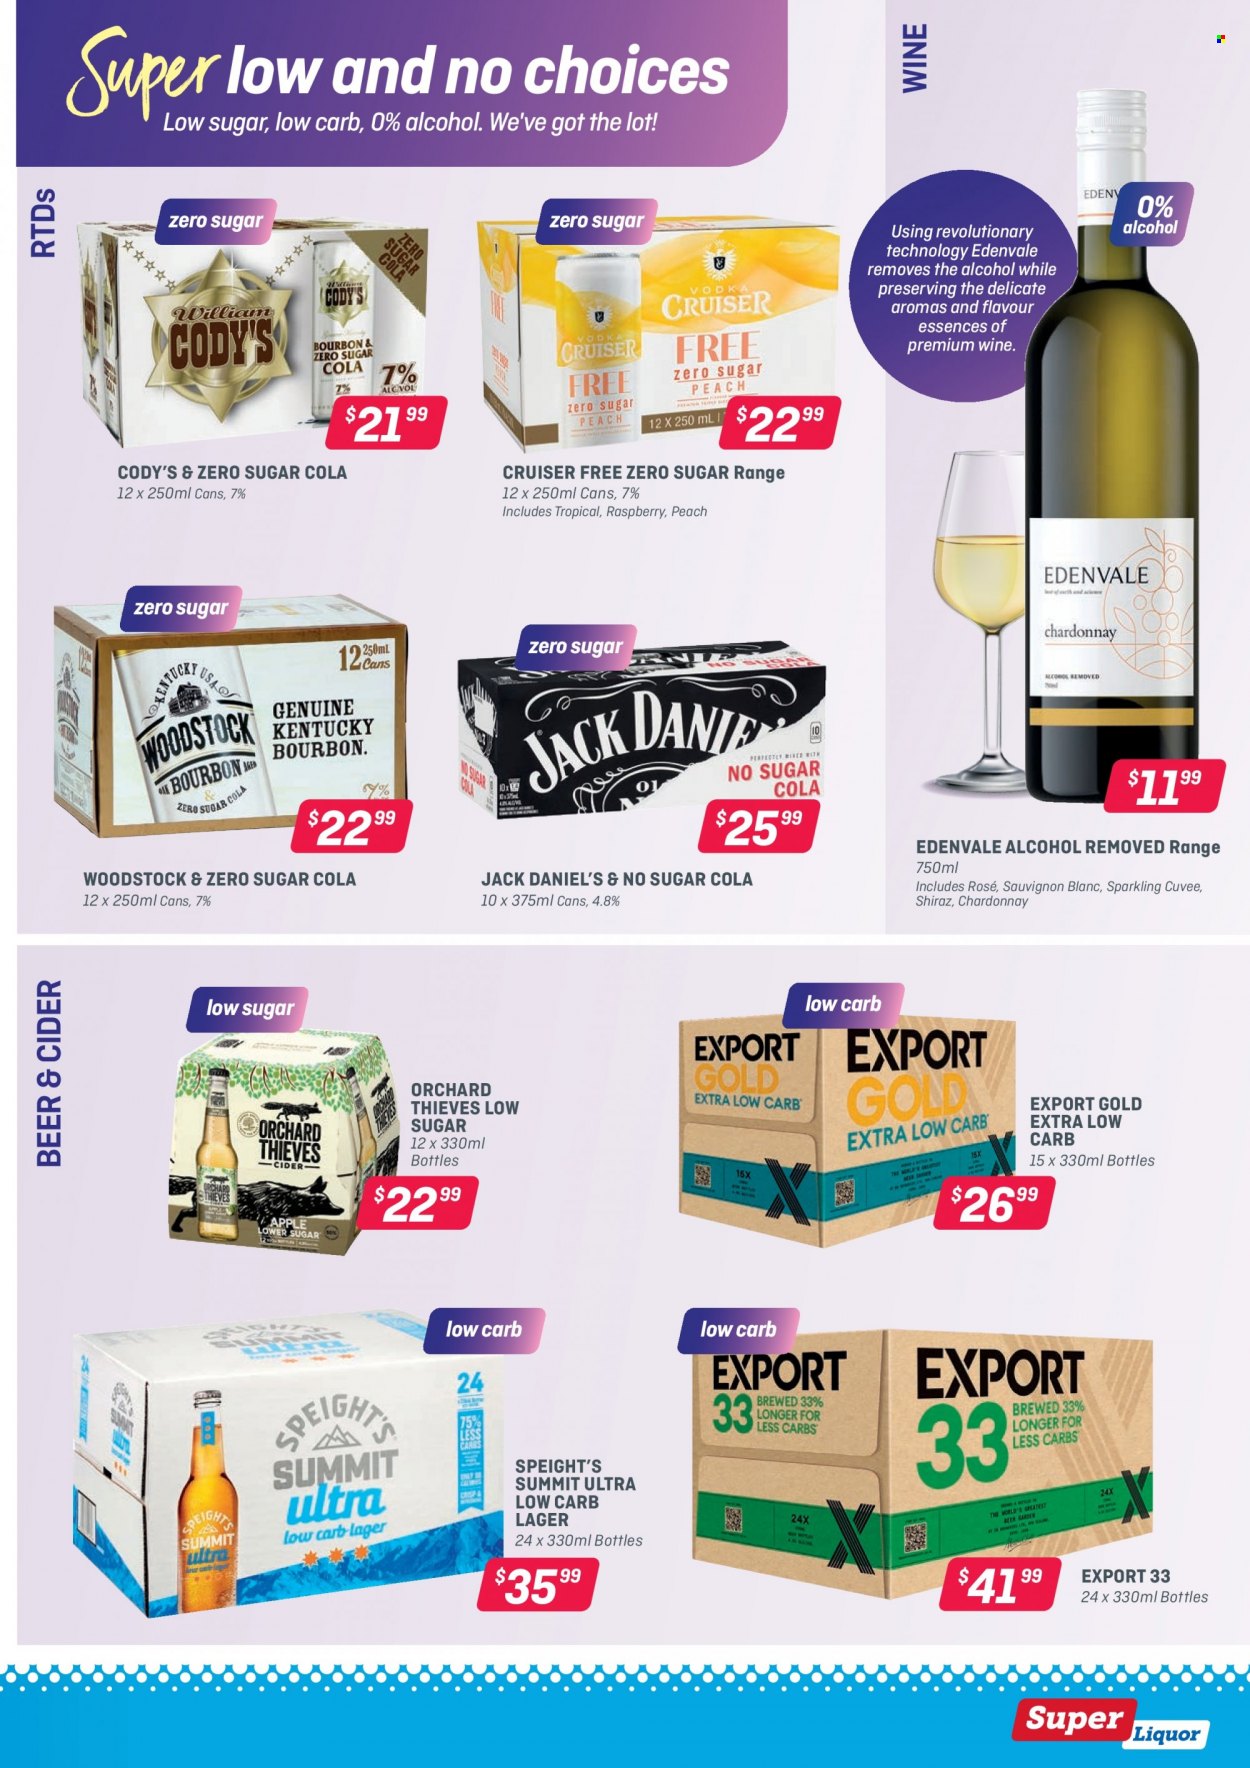 thumbnail - Super Liquor mailer - 01.11.2021 - 14.11.2021 - Sales products - red wine, white wine, Chardonnay, wine, Cuvée, Shiraz, Sauvignon Blanc, rosé wine, Jack Daniel's, cider, Lager. Page 9.